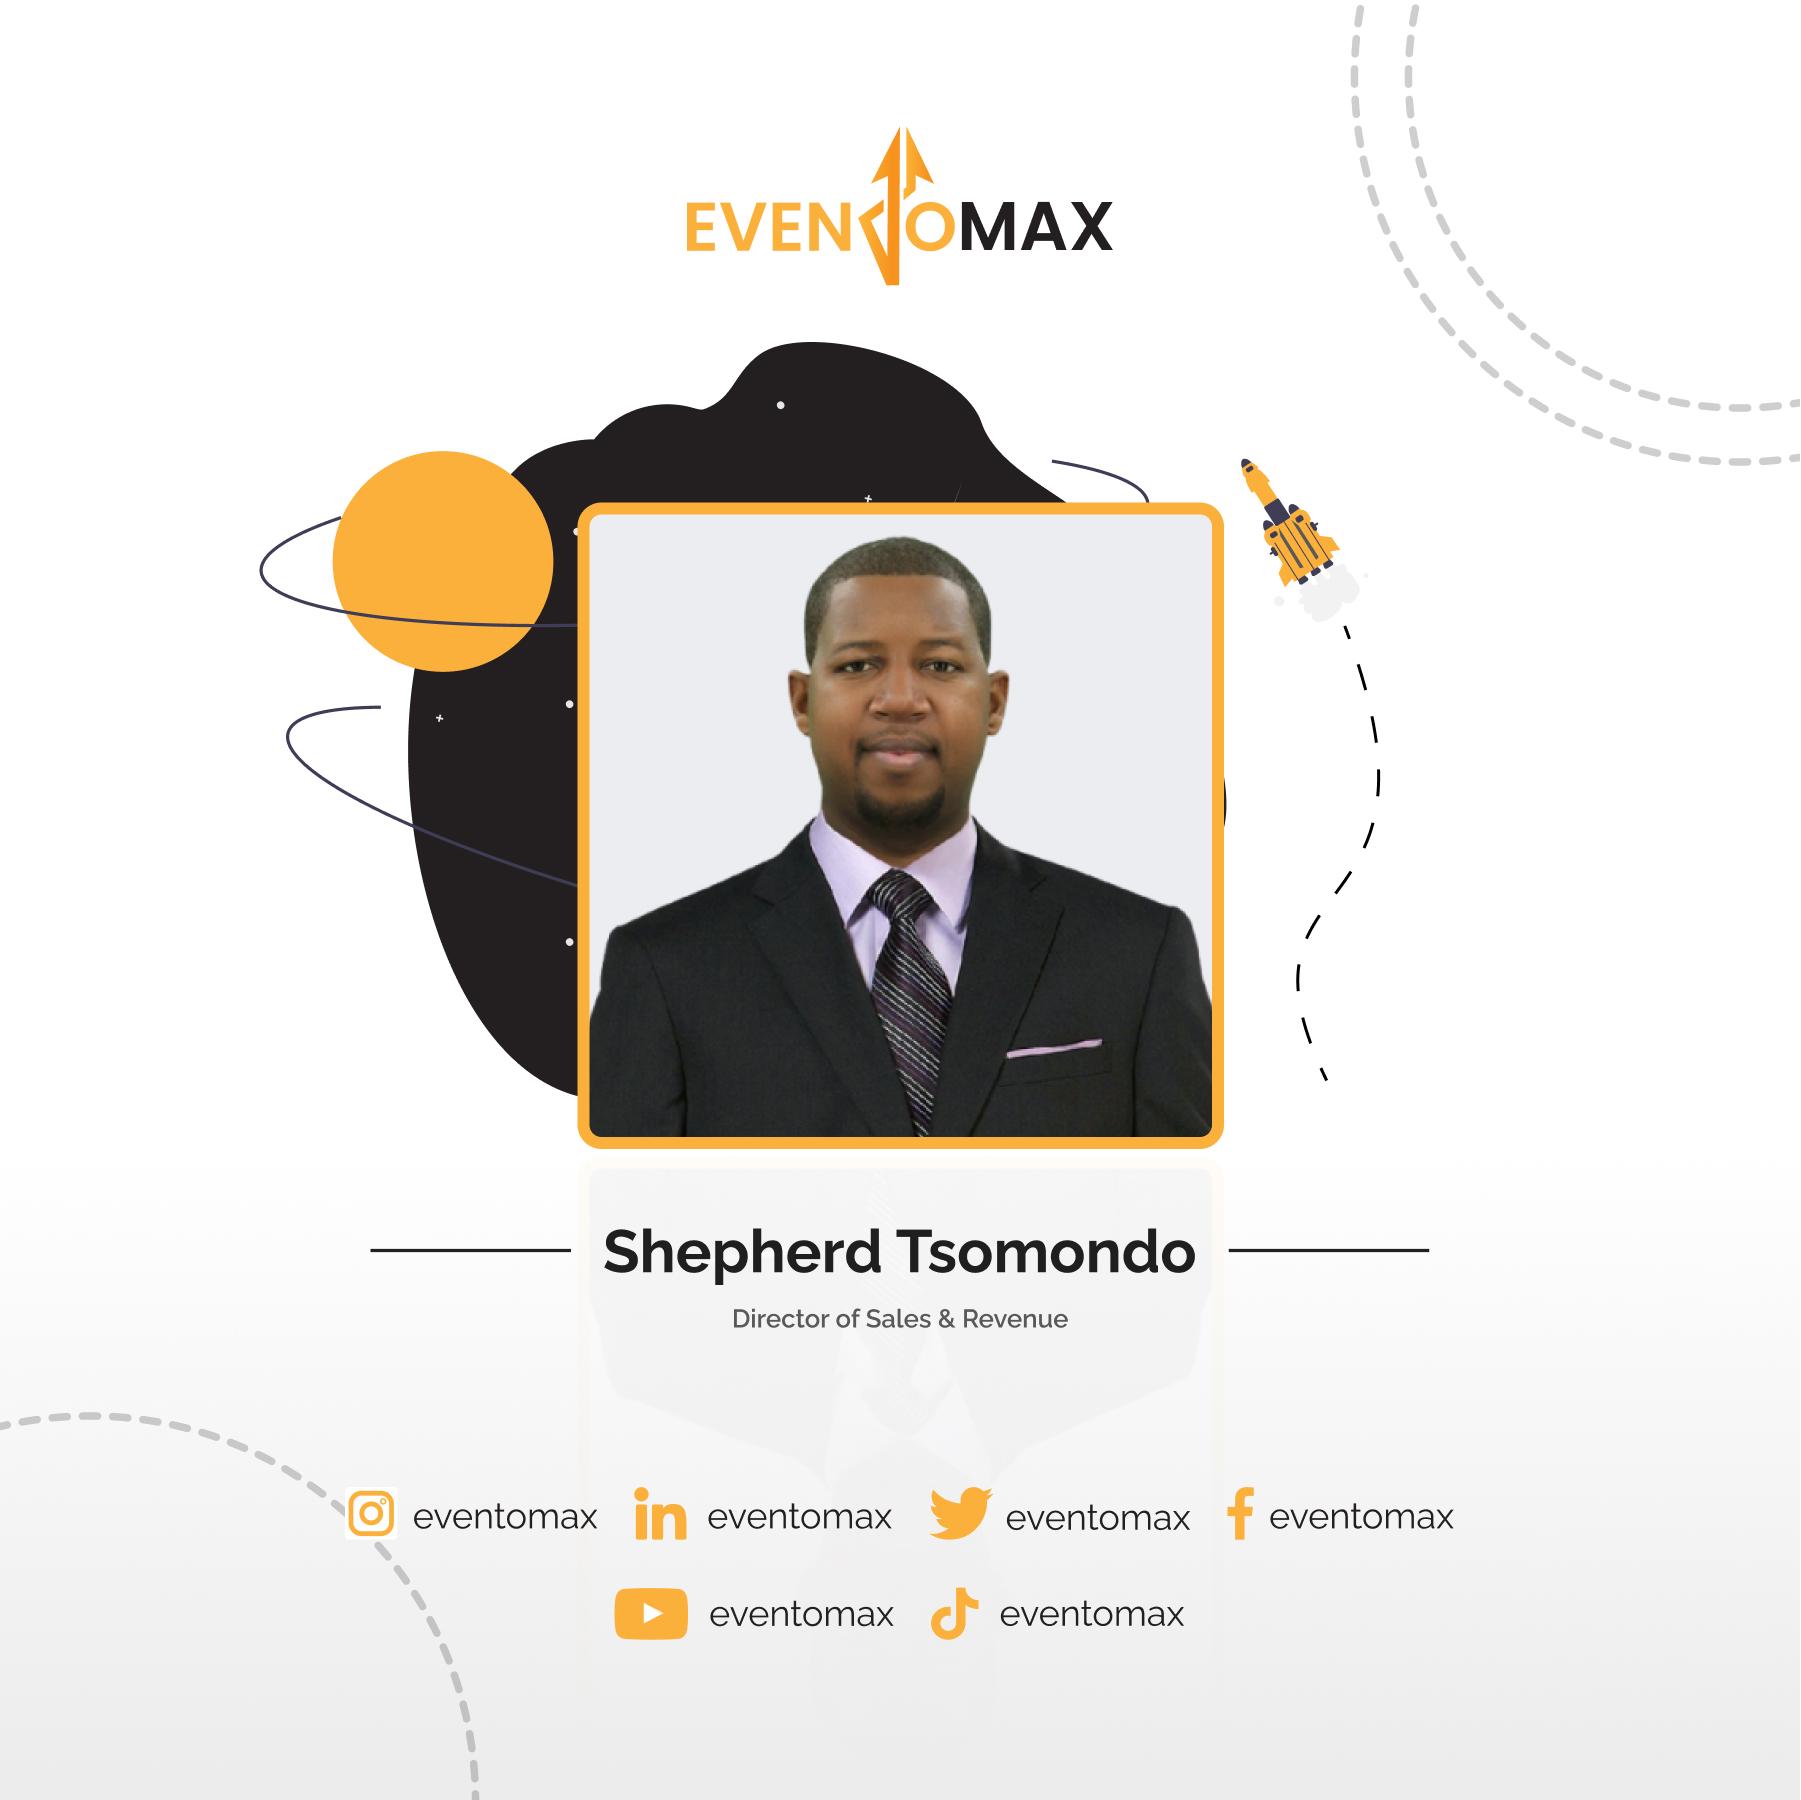 Shepherd Tsomondo: Focus and goal-driven manager